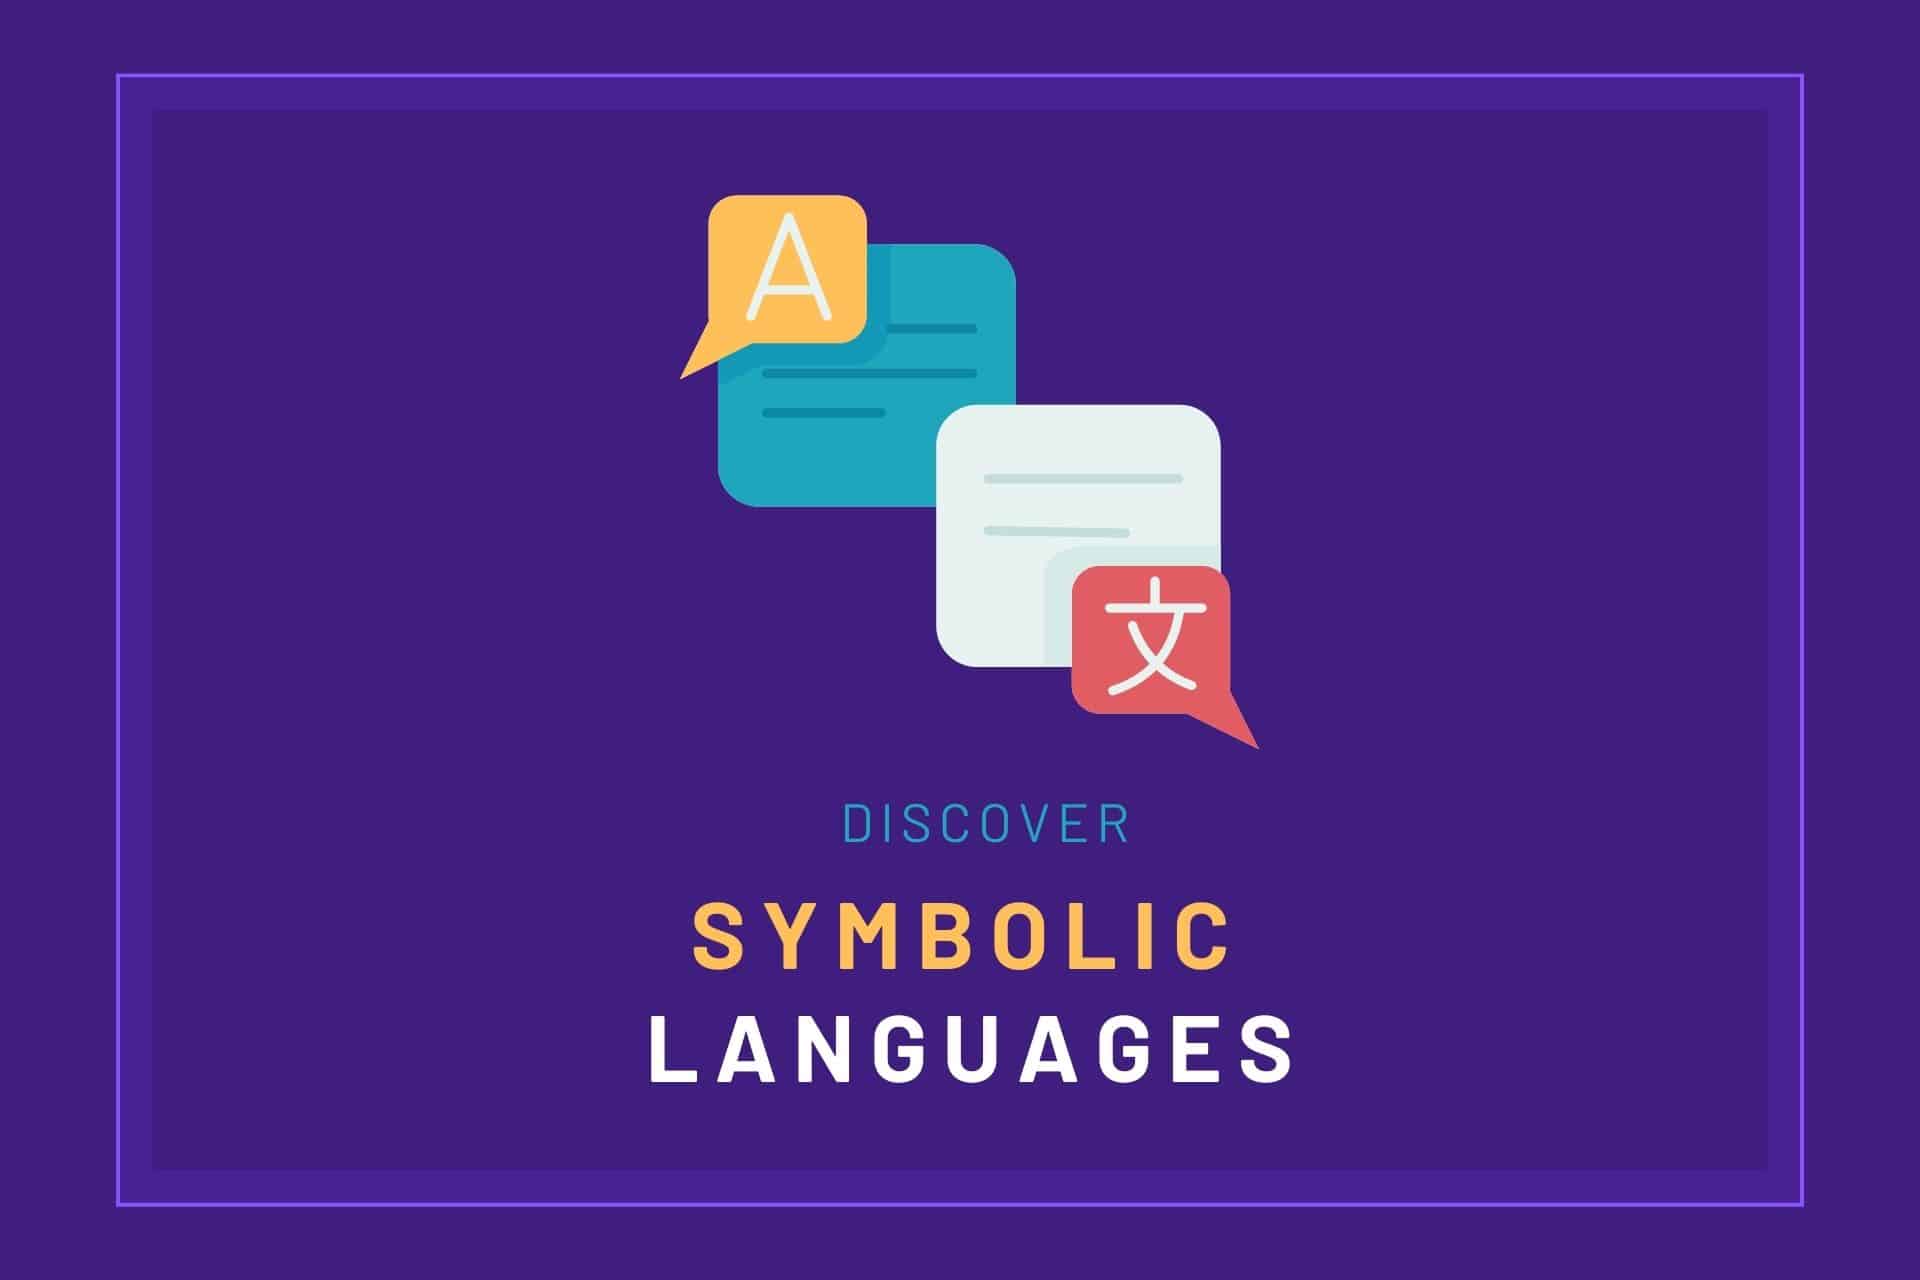 Languages with Symbols